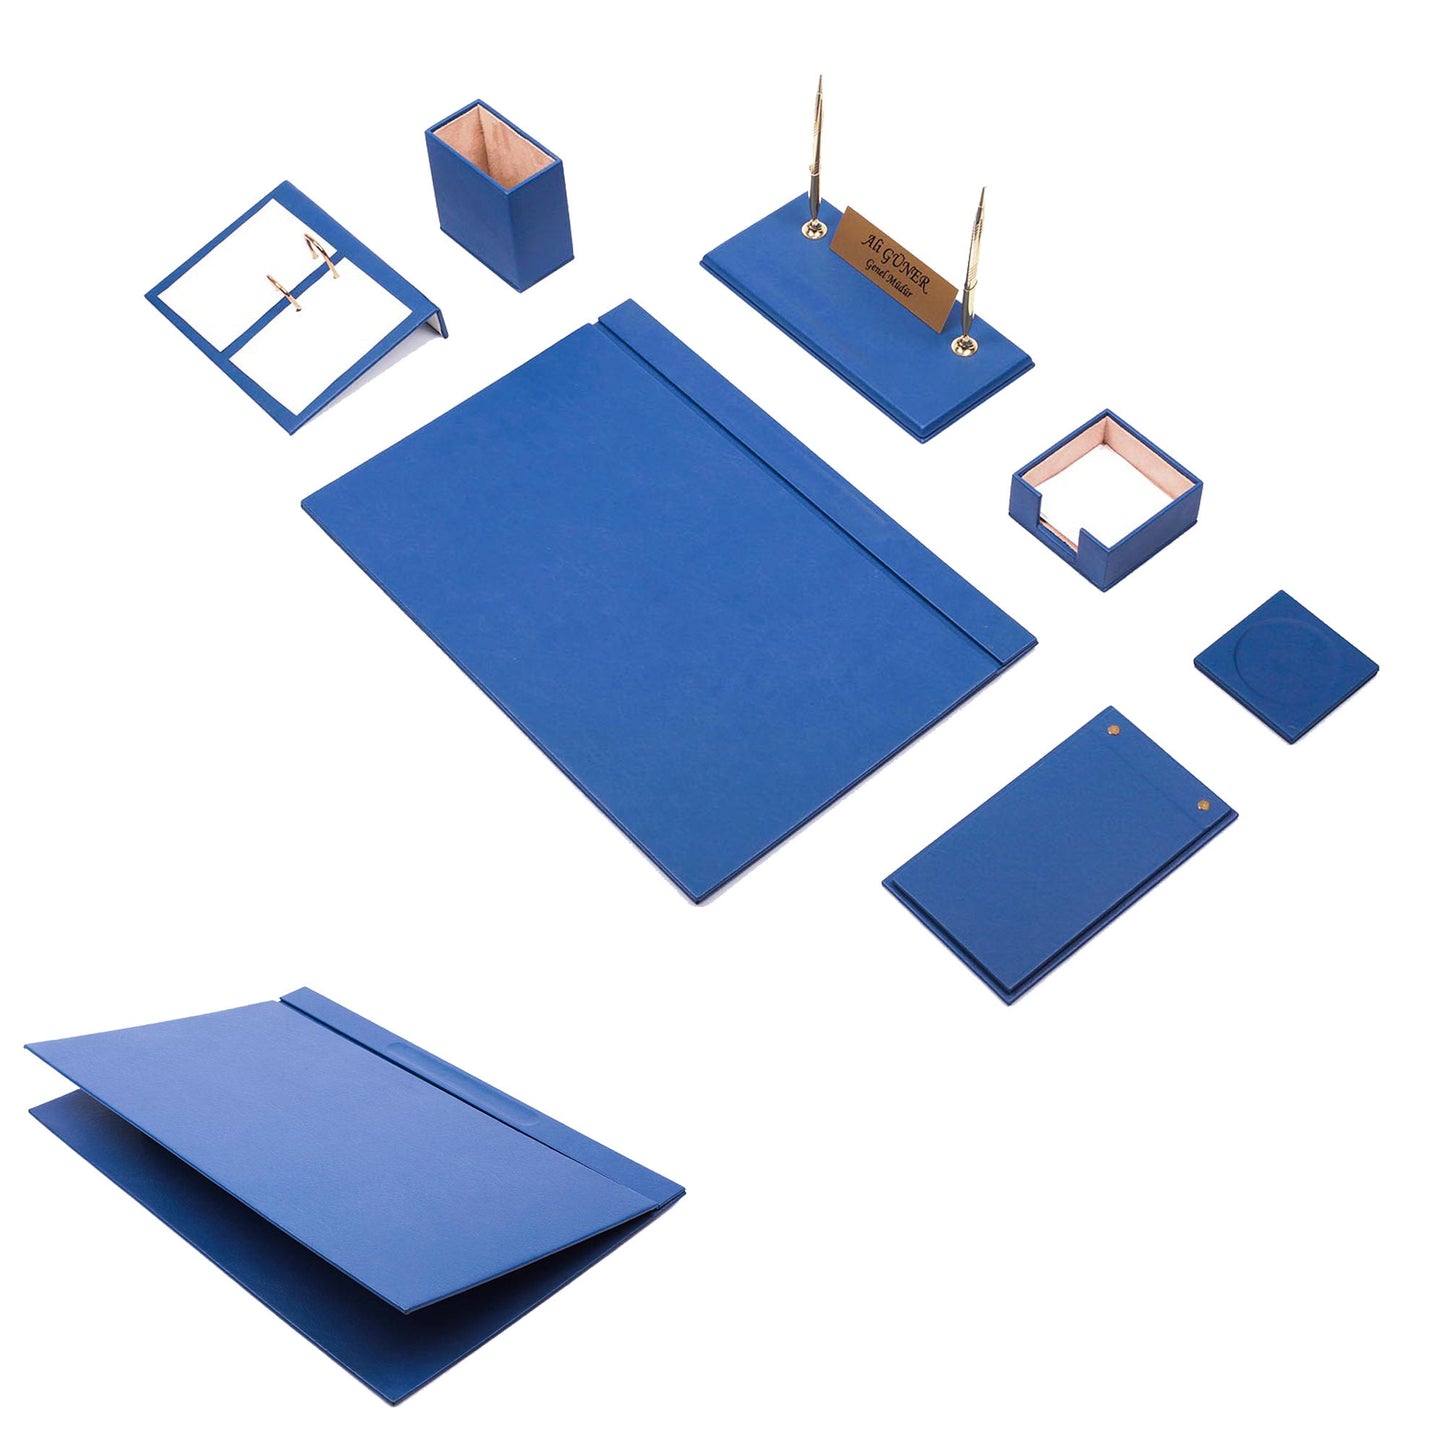 Leather Desk Set-9 Accessories-Desk Organizer-Office Desk Accessories-Desk Pad-Desktop Storage - Desk Set - Desk Accessories